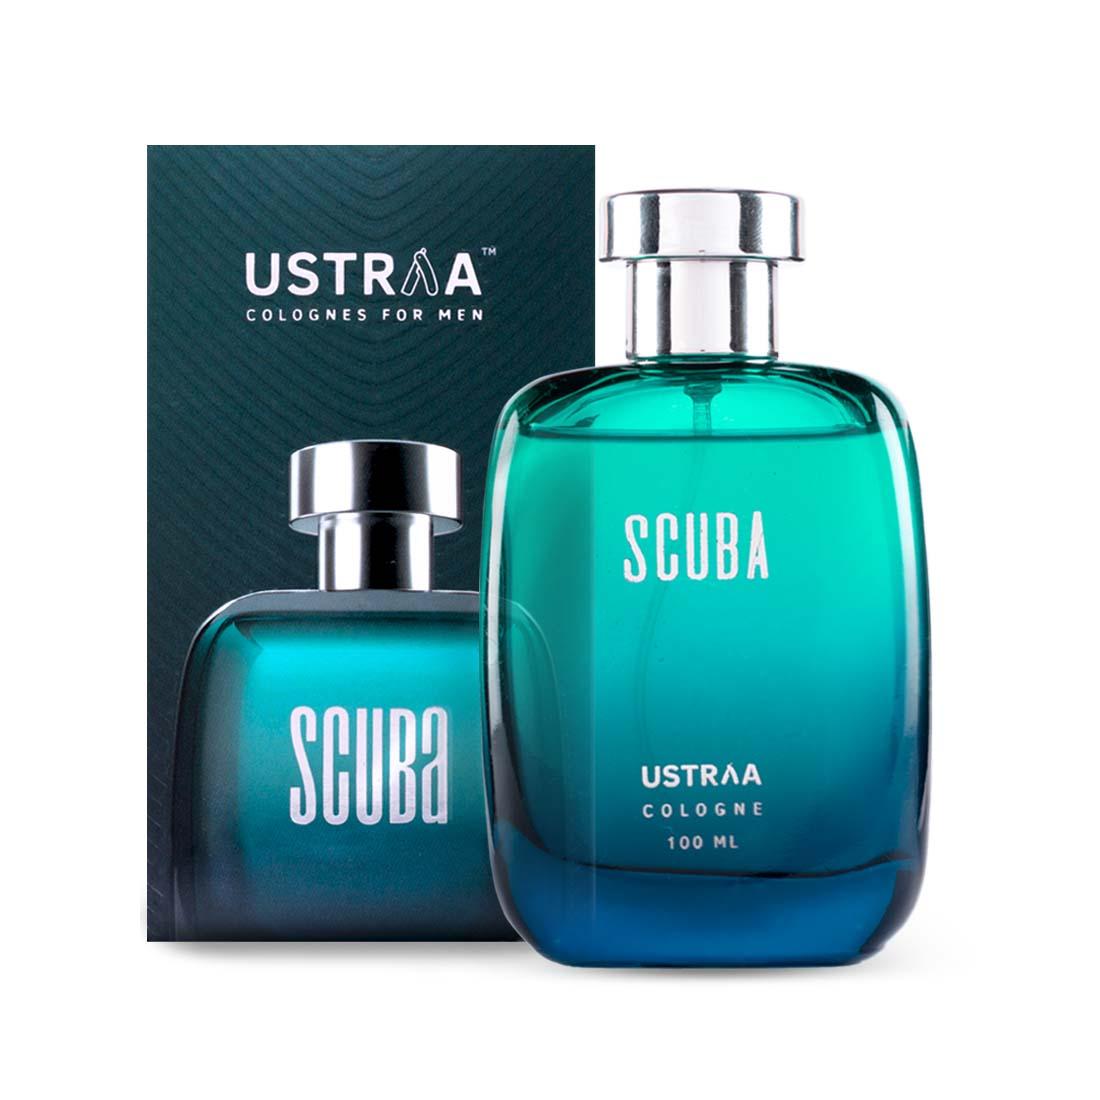 Scuba Cologne – 100 ml – Perfume For Men